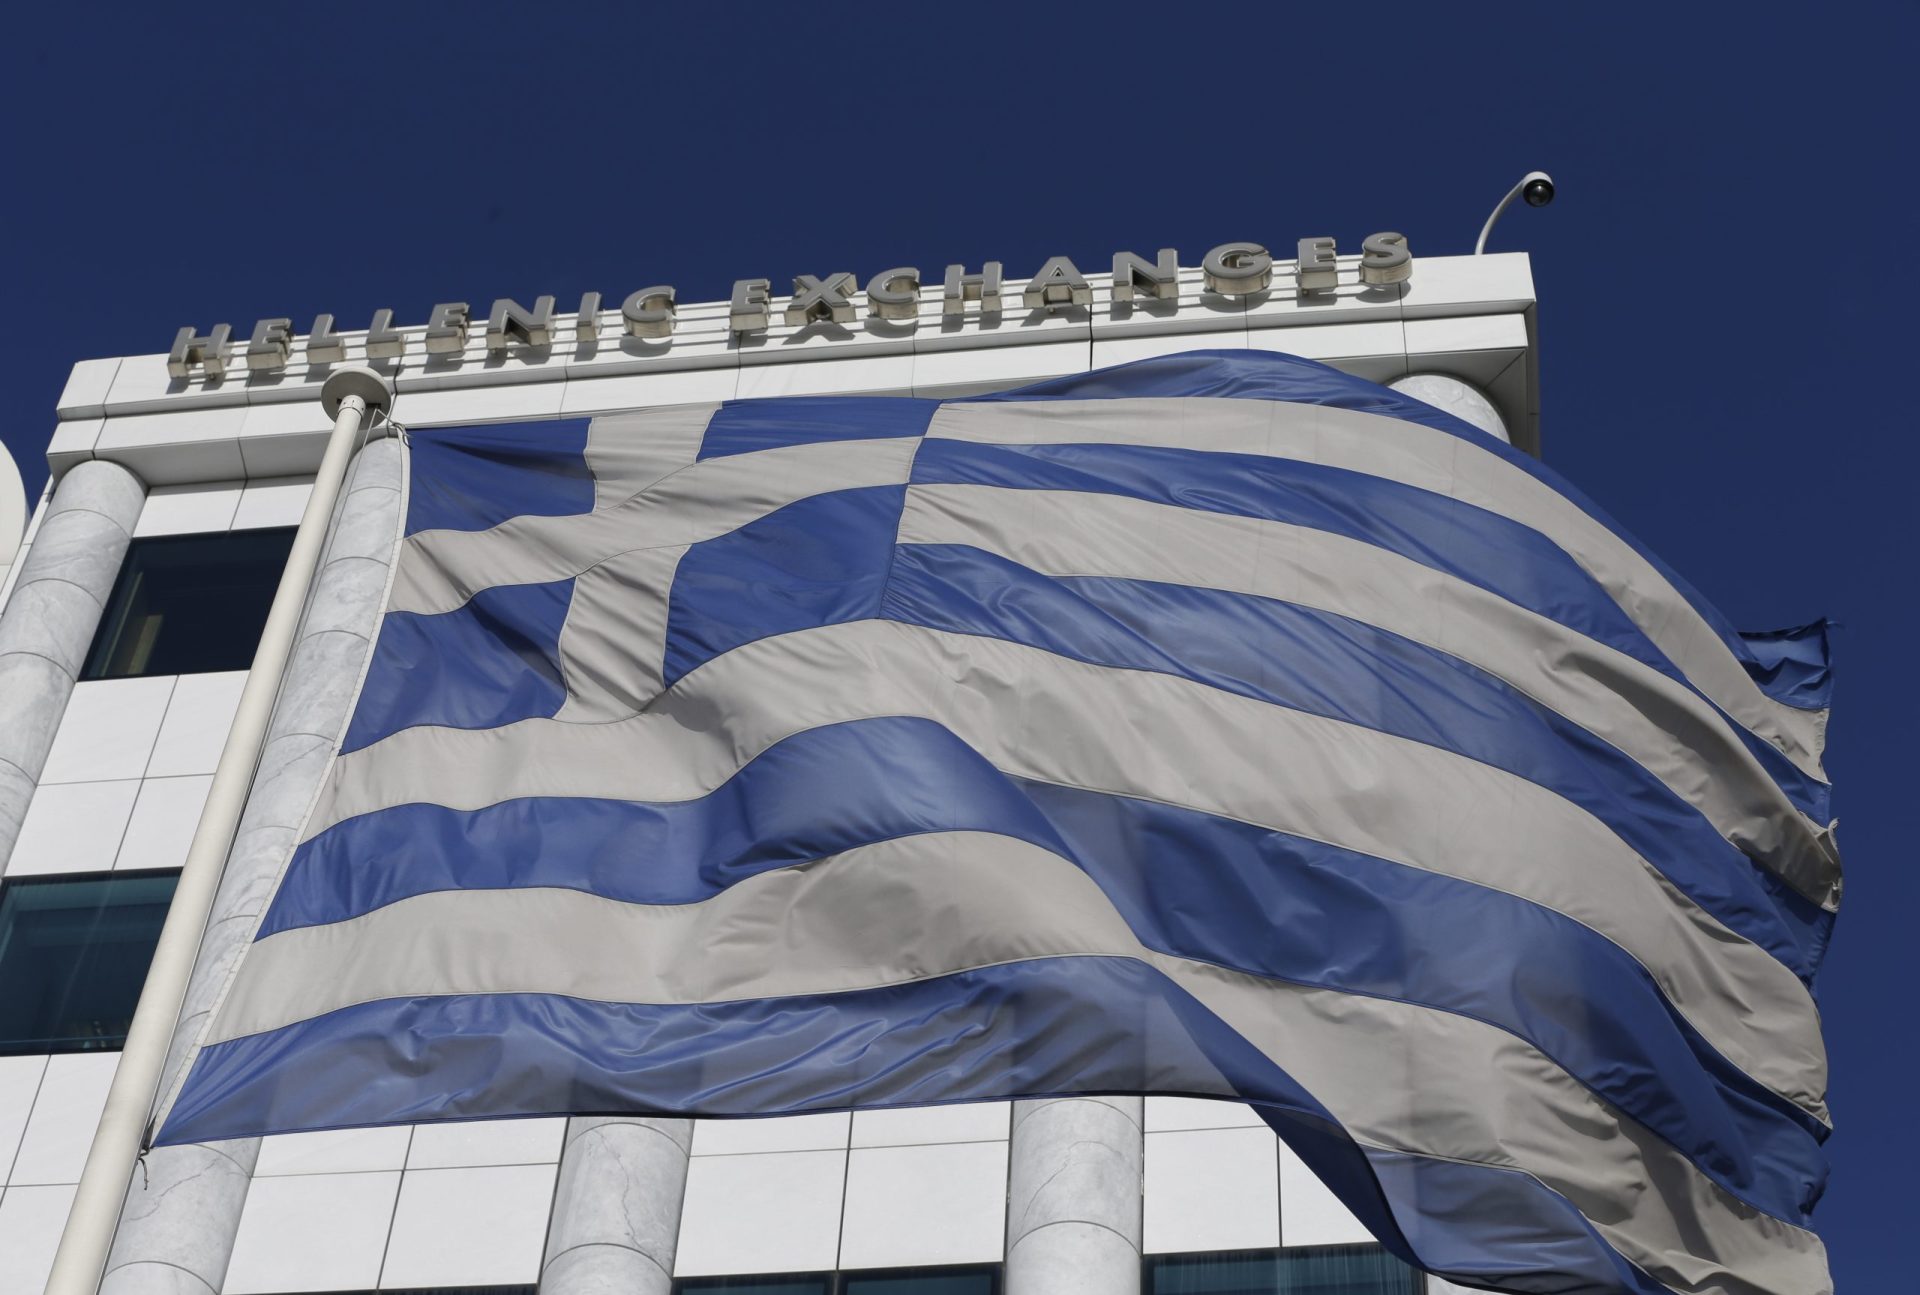 Parlamento grego dissolvido